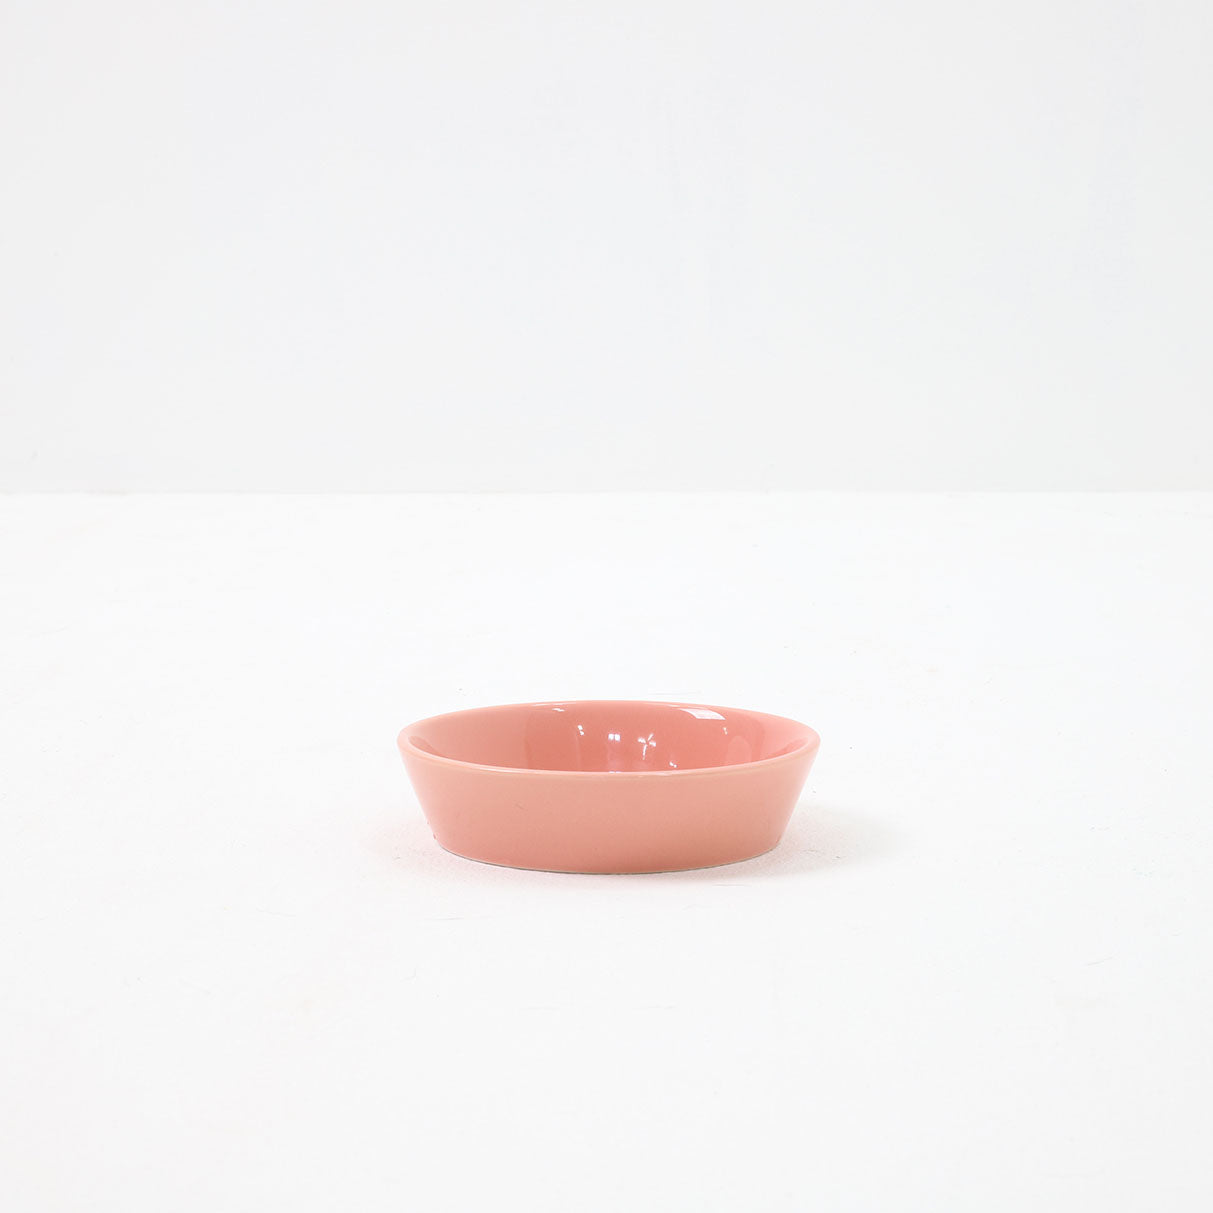 INHERENT Oreo Bowl in Pink - Small | CreatureLand.